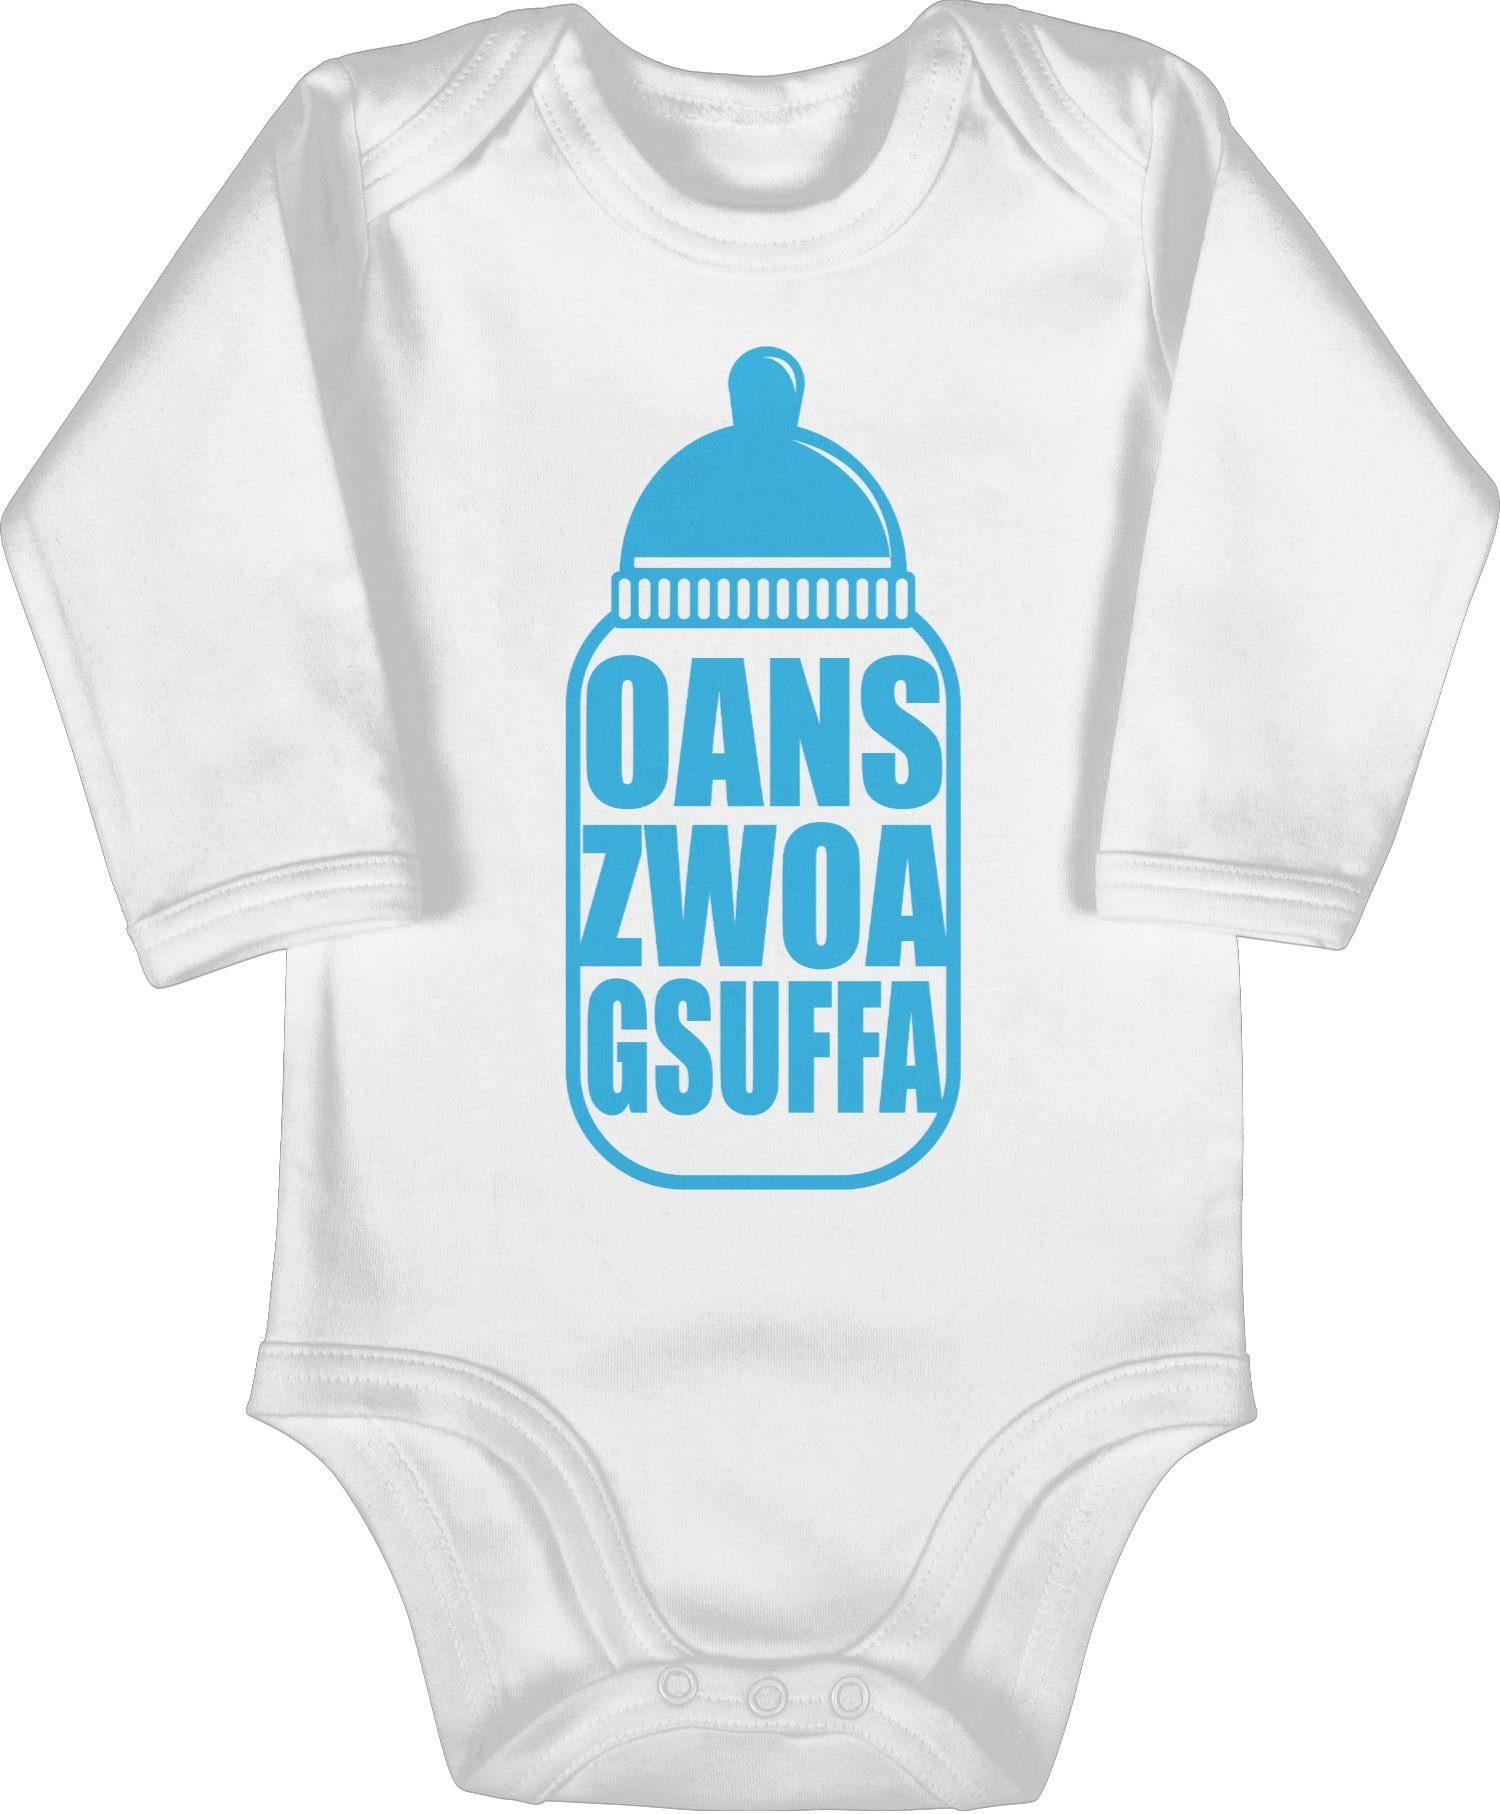 Shirtracer Shirtbody Babyflasche Oans Zwoa Gsuffa blau Mode für Oktoberfest Baby Outfit 2 Weiß